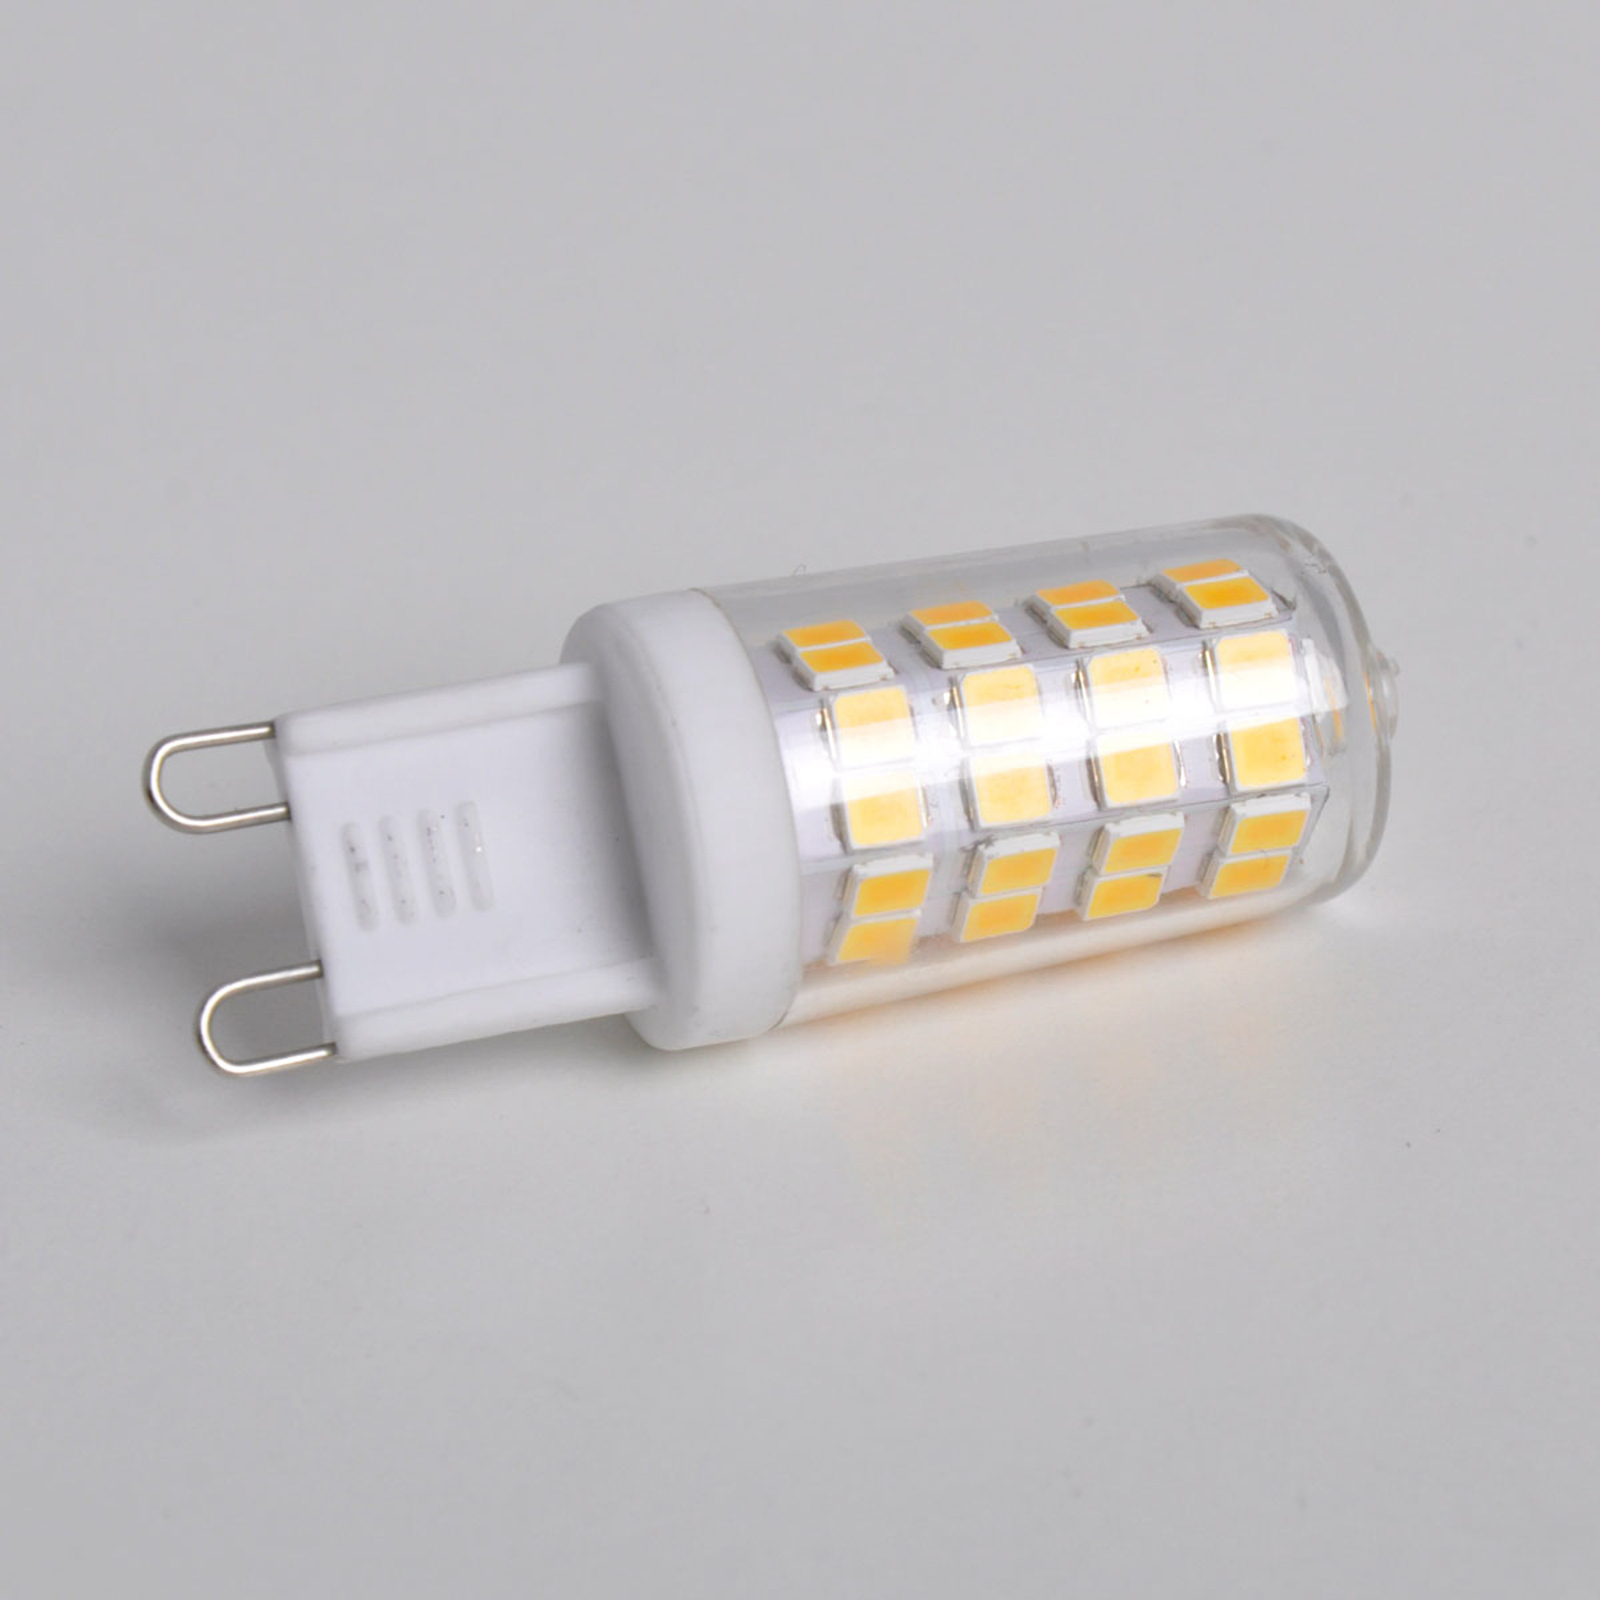 LED stiftlamp G9 3W, warmwit, 330 lumen 5 per set